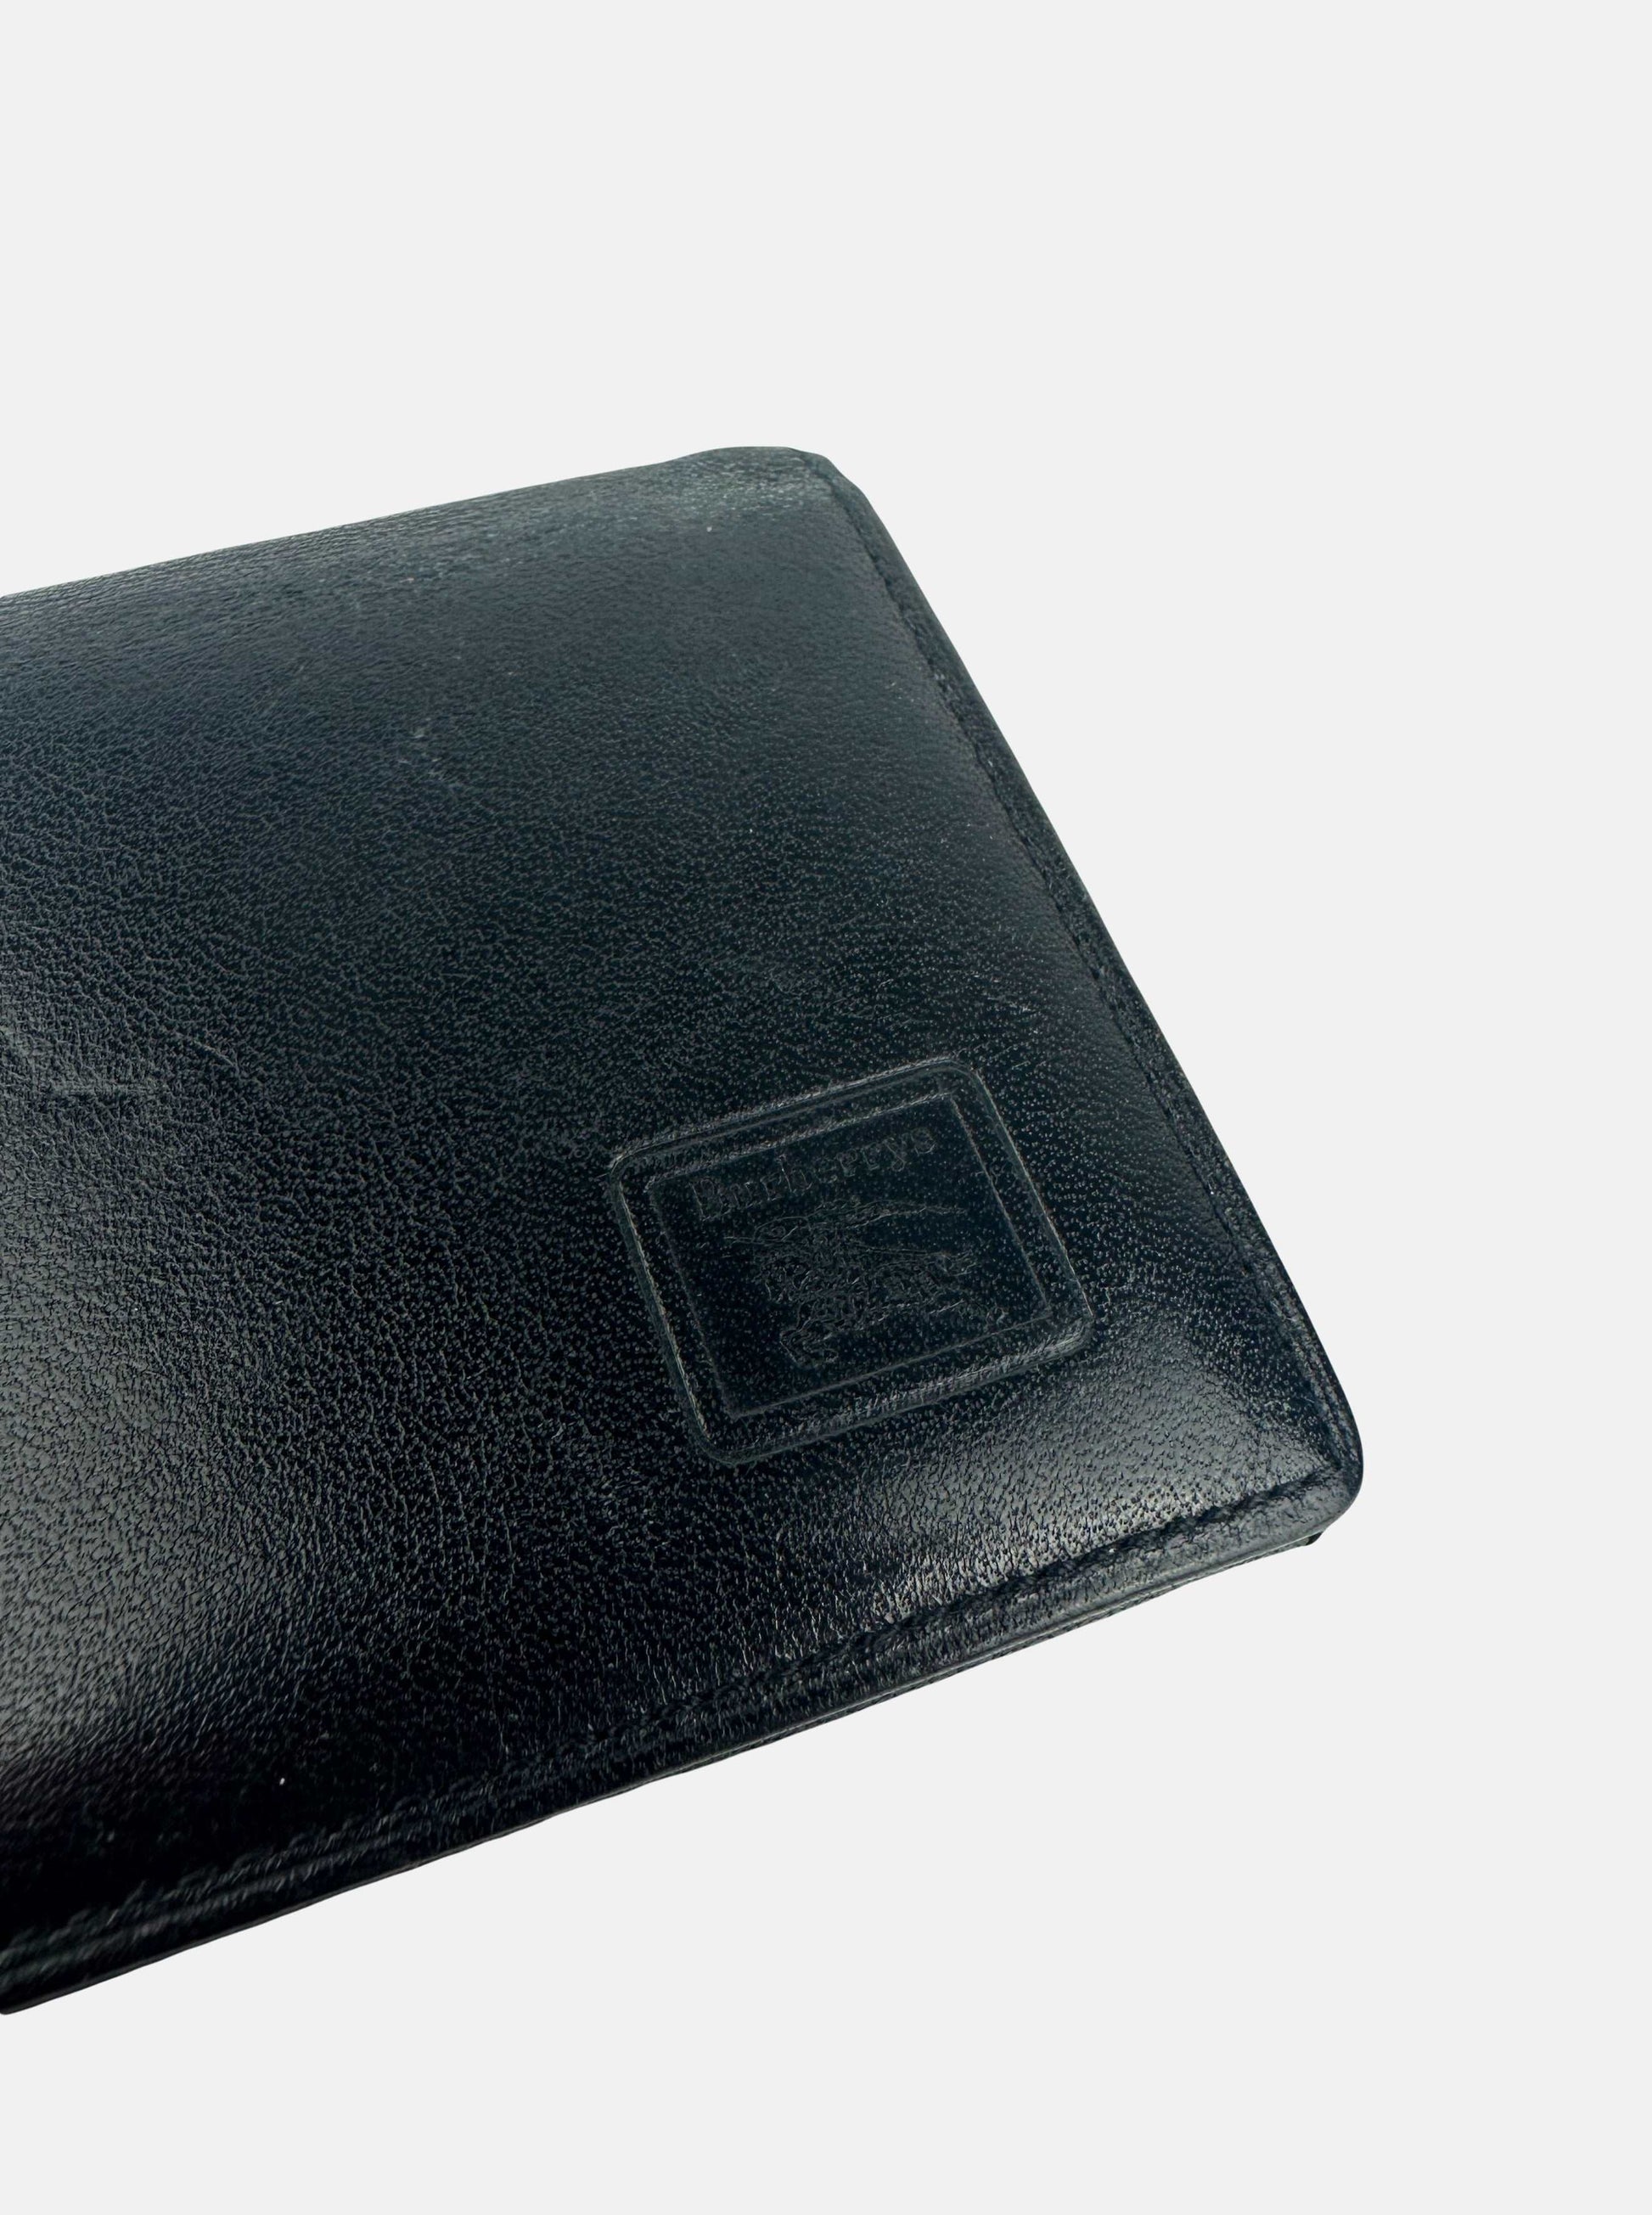 Black Leather Nova Check Pocket Organiser Wallet